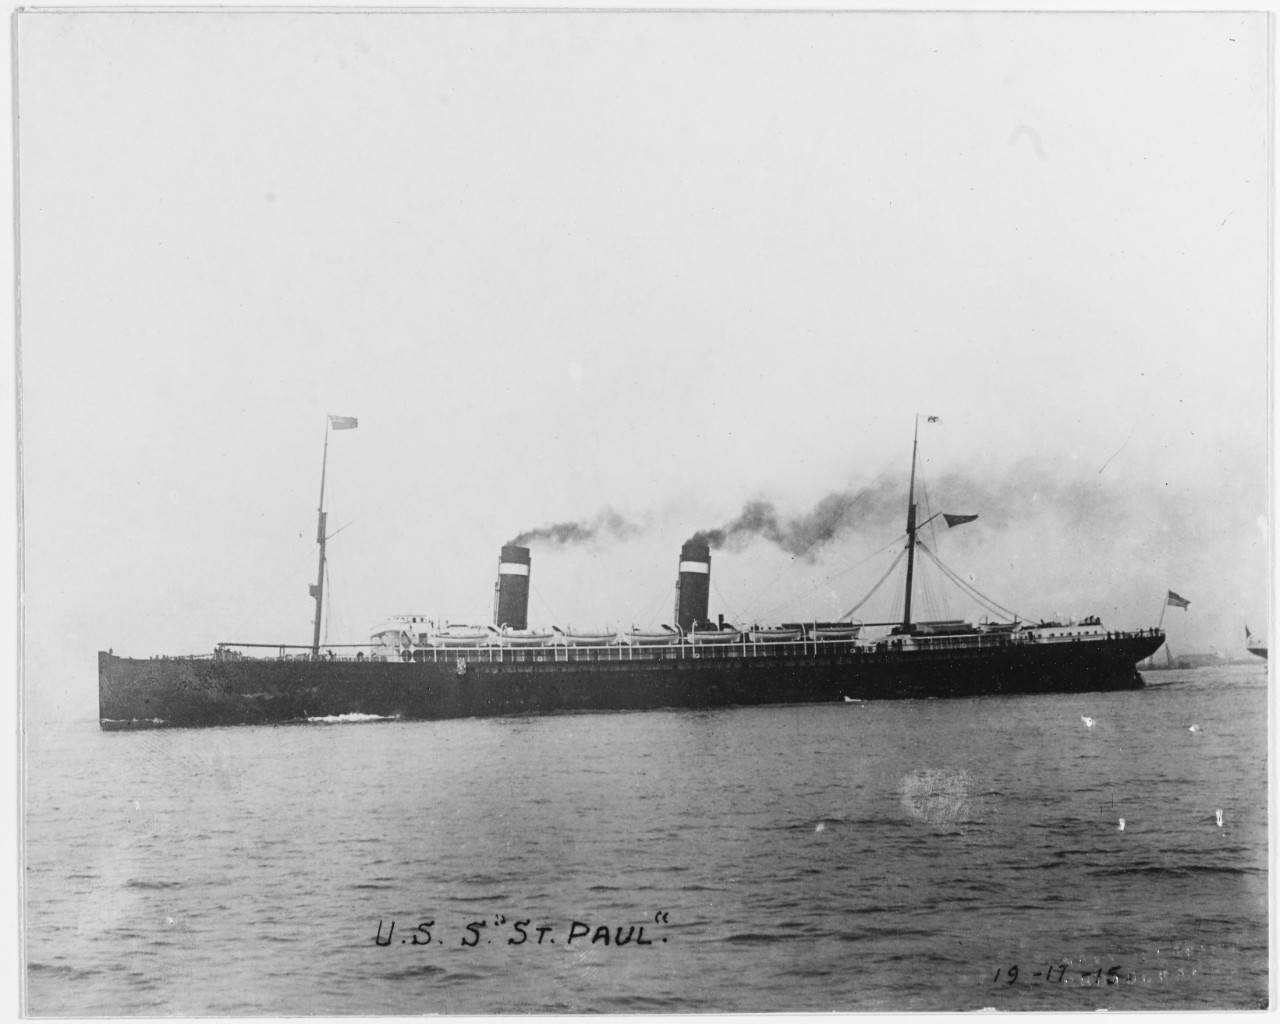 S.S. ST. PAUL (U.S. merchant passenger ship, 1895-1923)